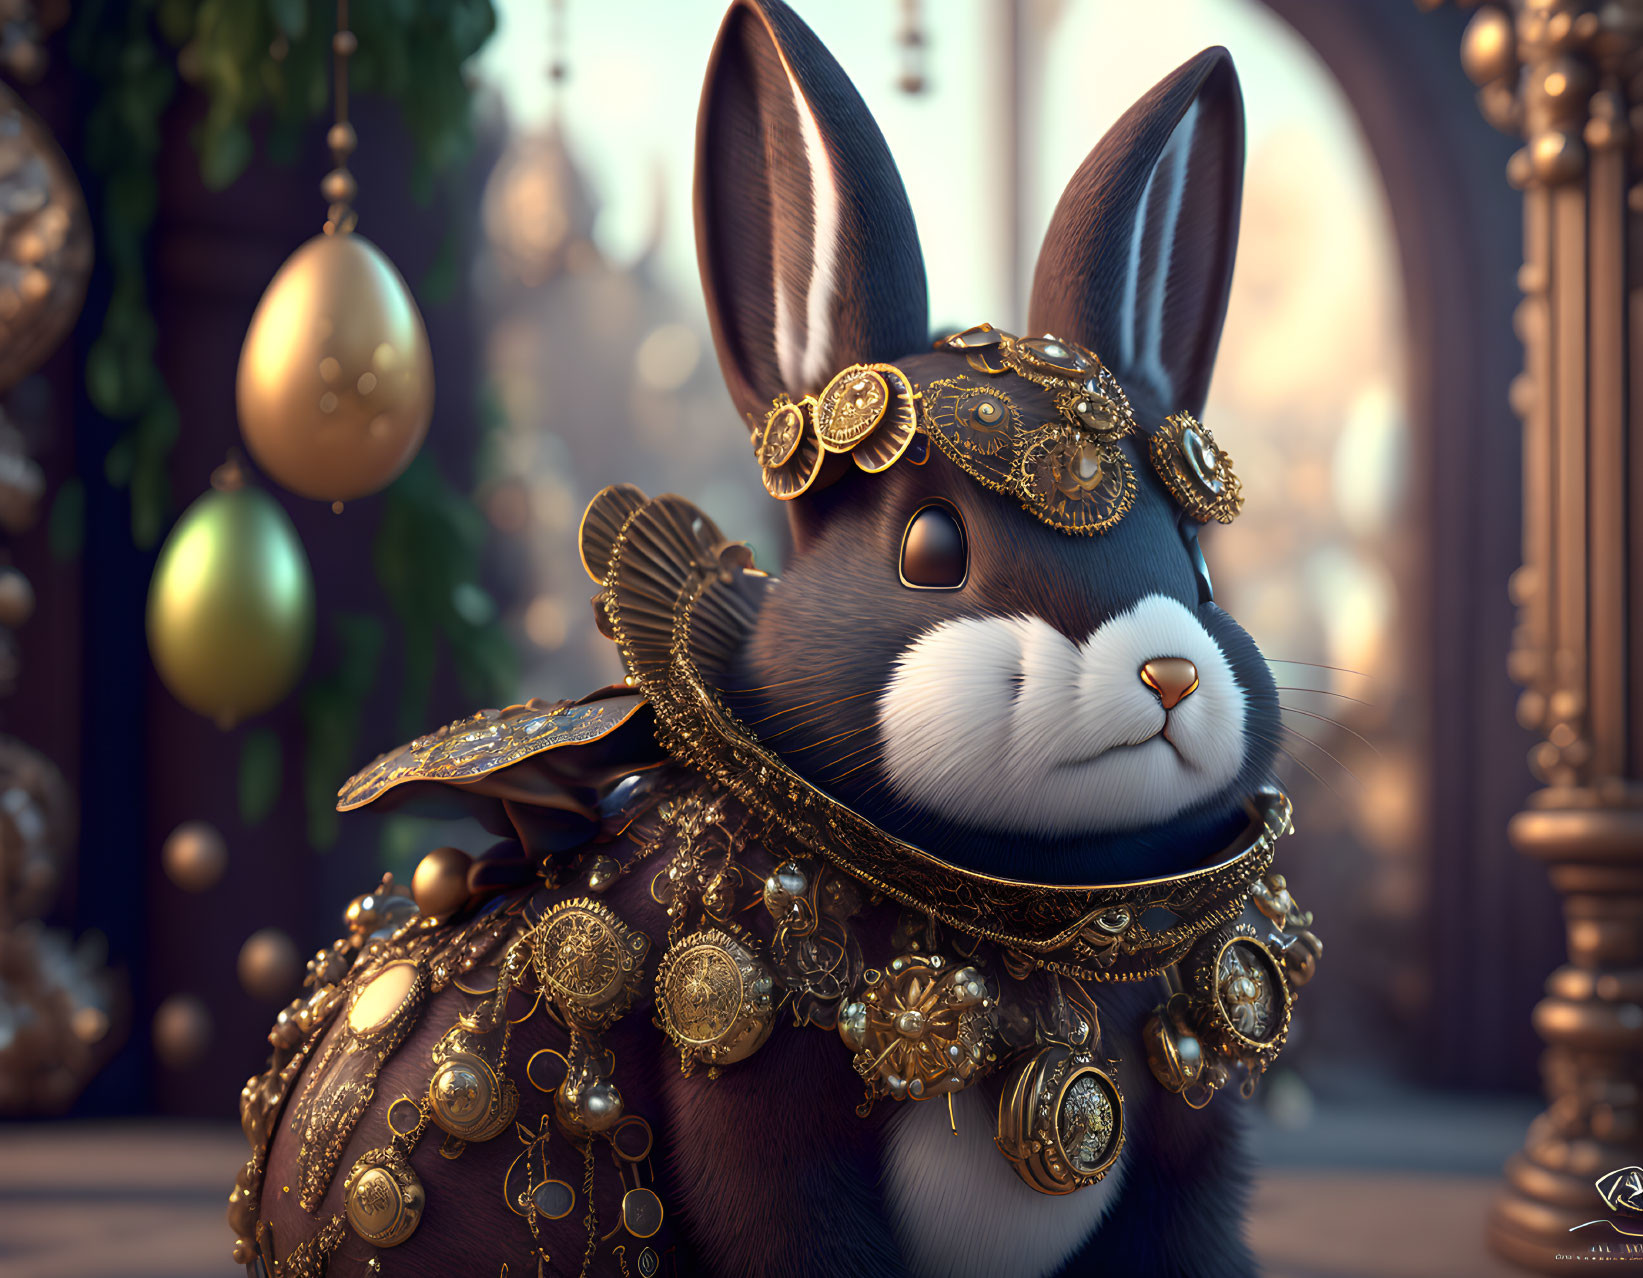 Regal rabbit with golden collar in elegant setting